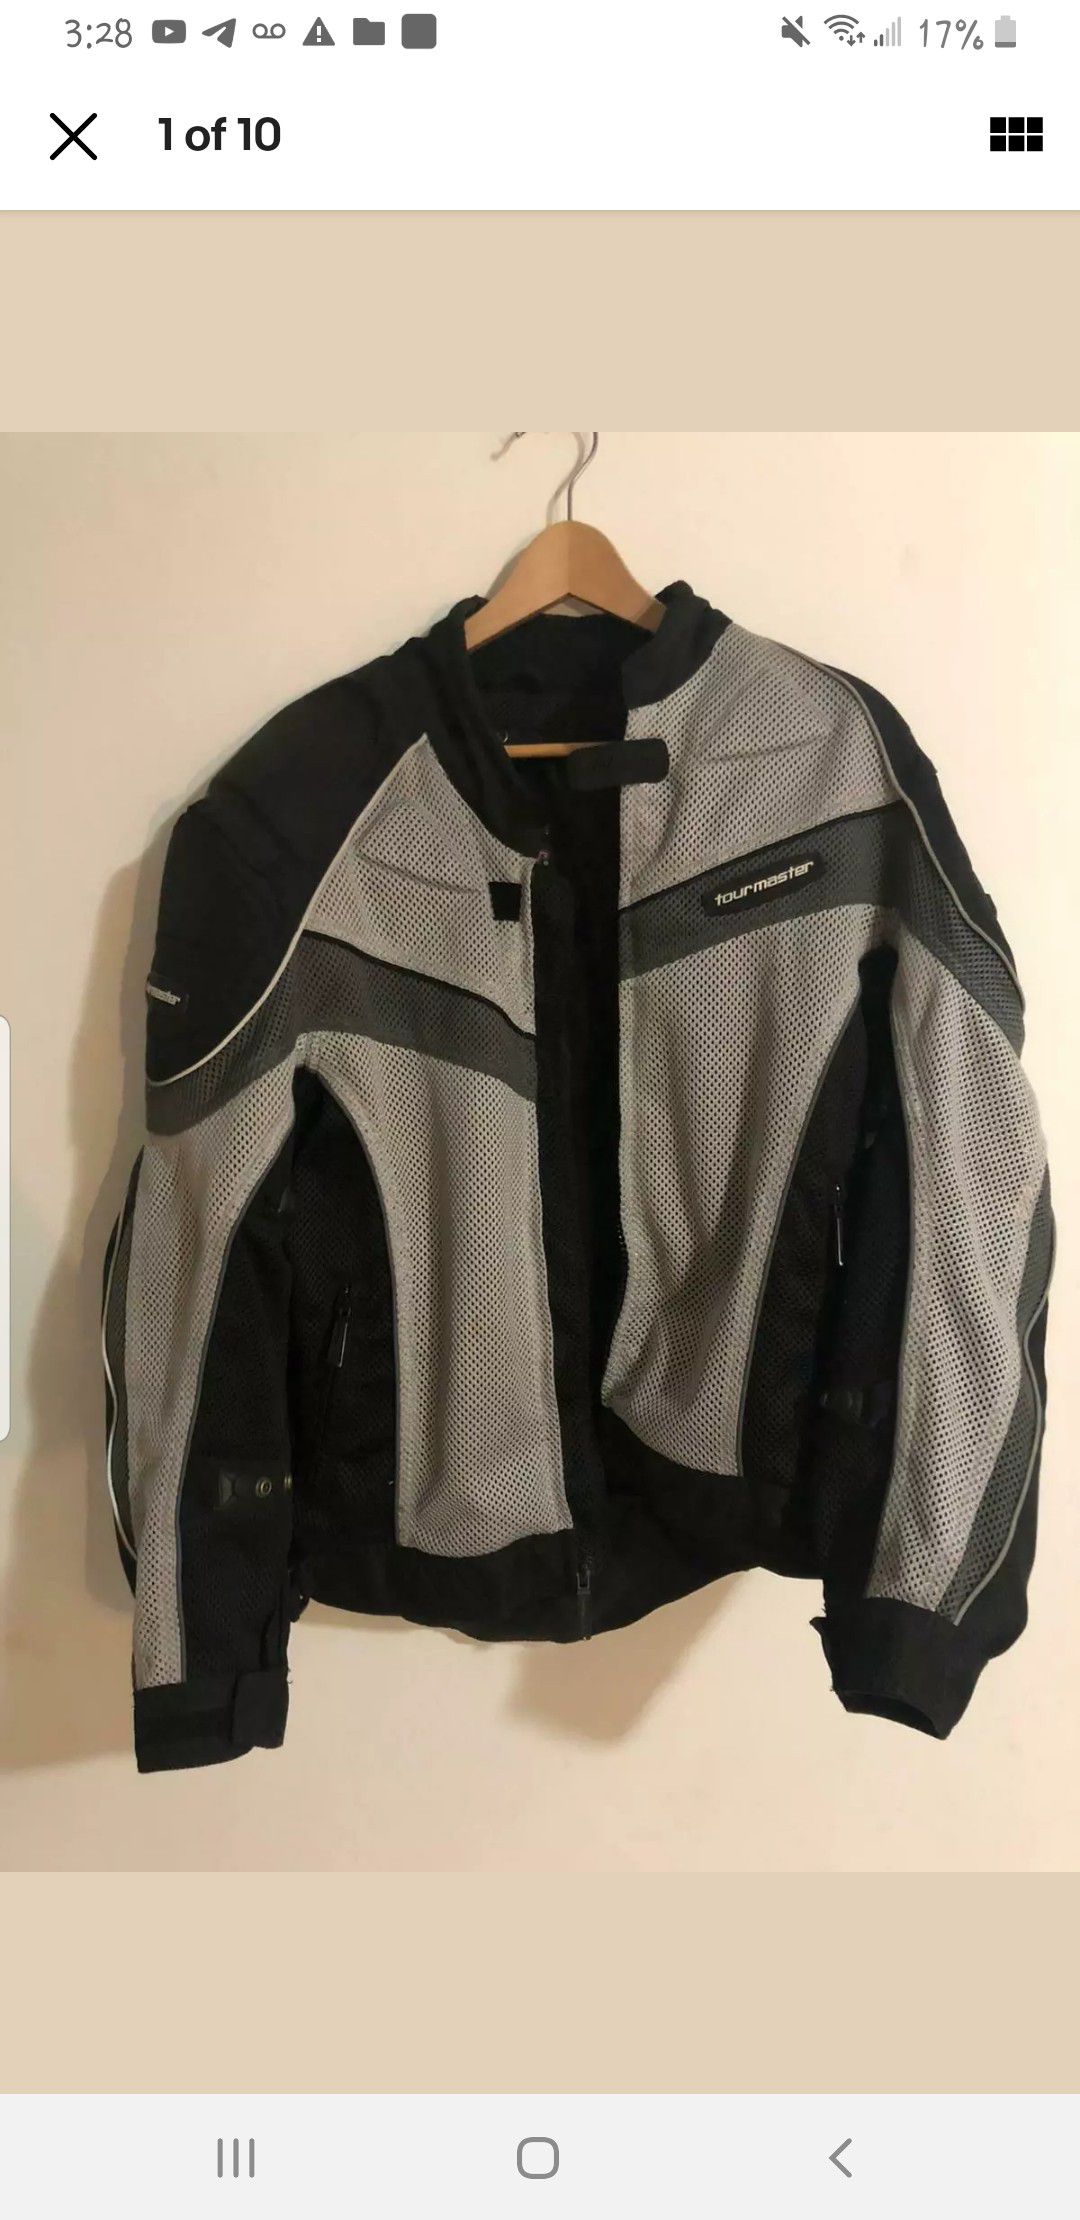 Tourmaster motorcycle jacket. Size m